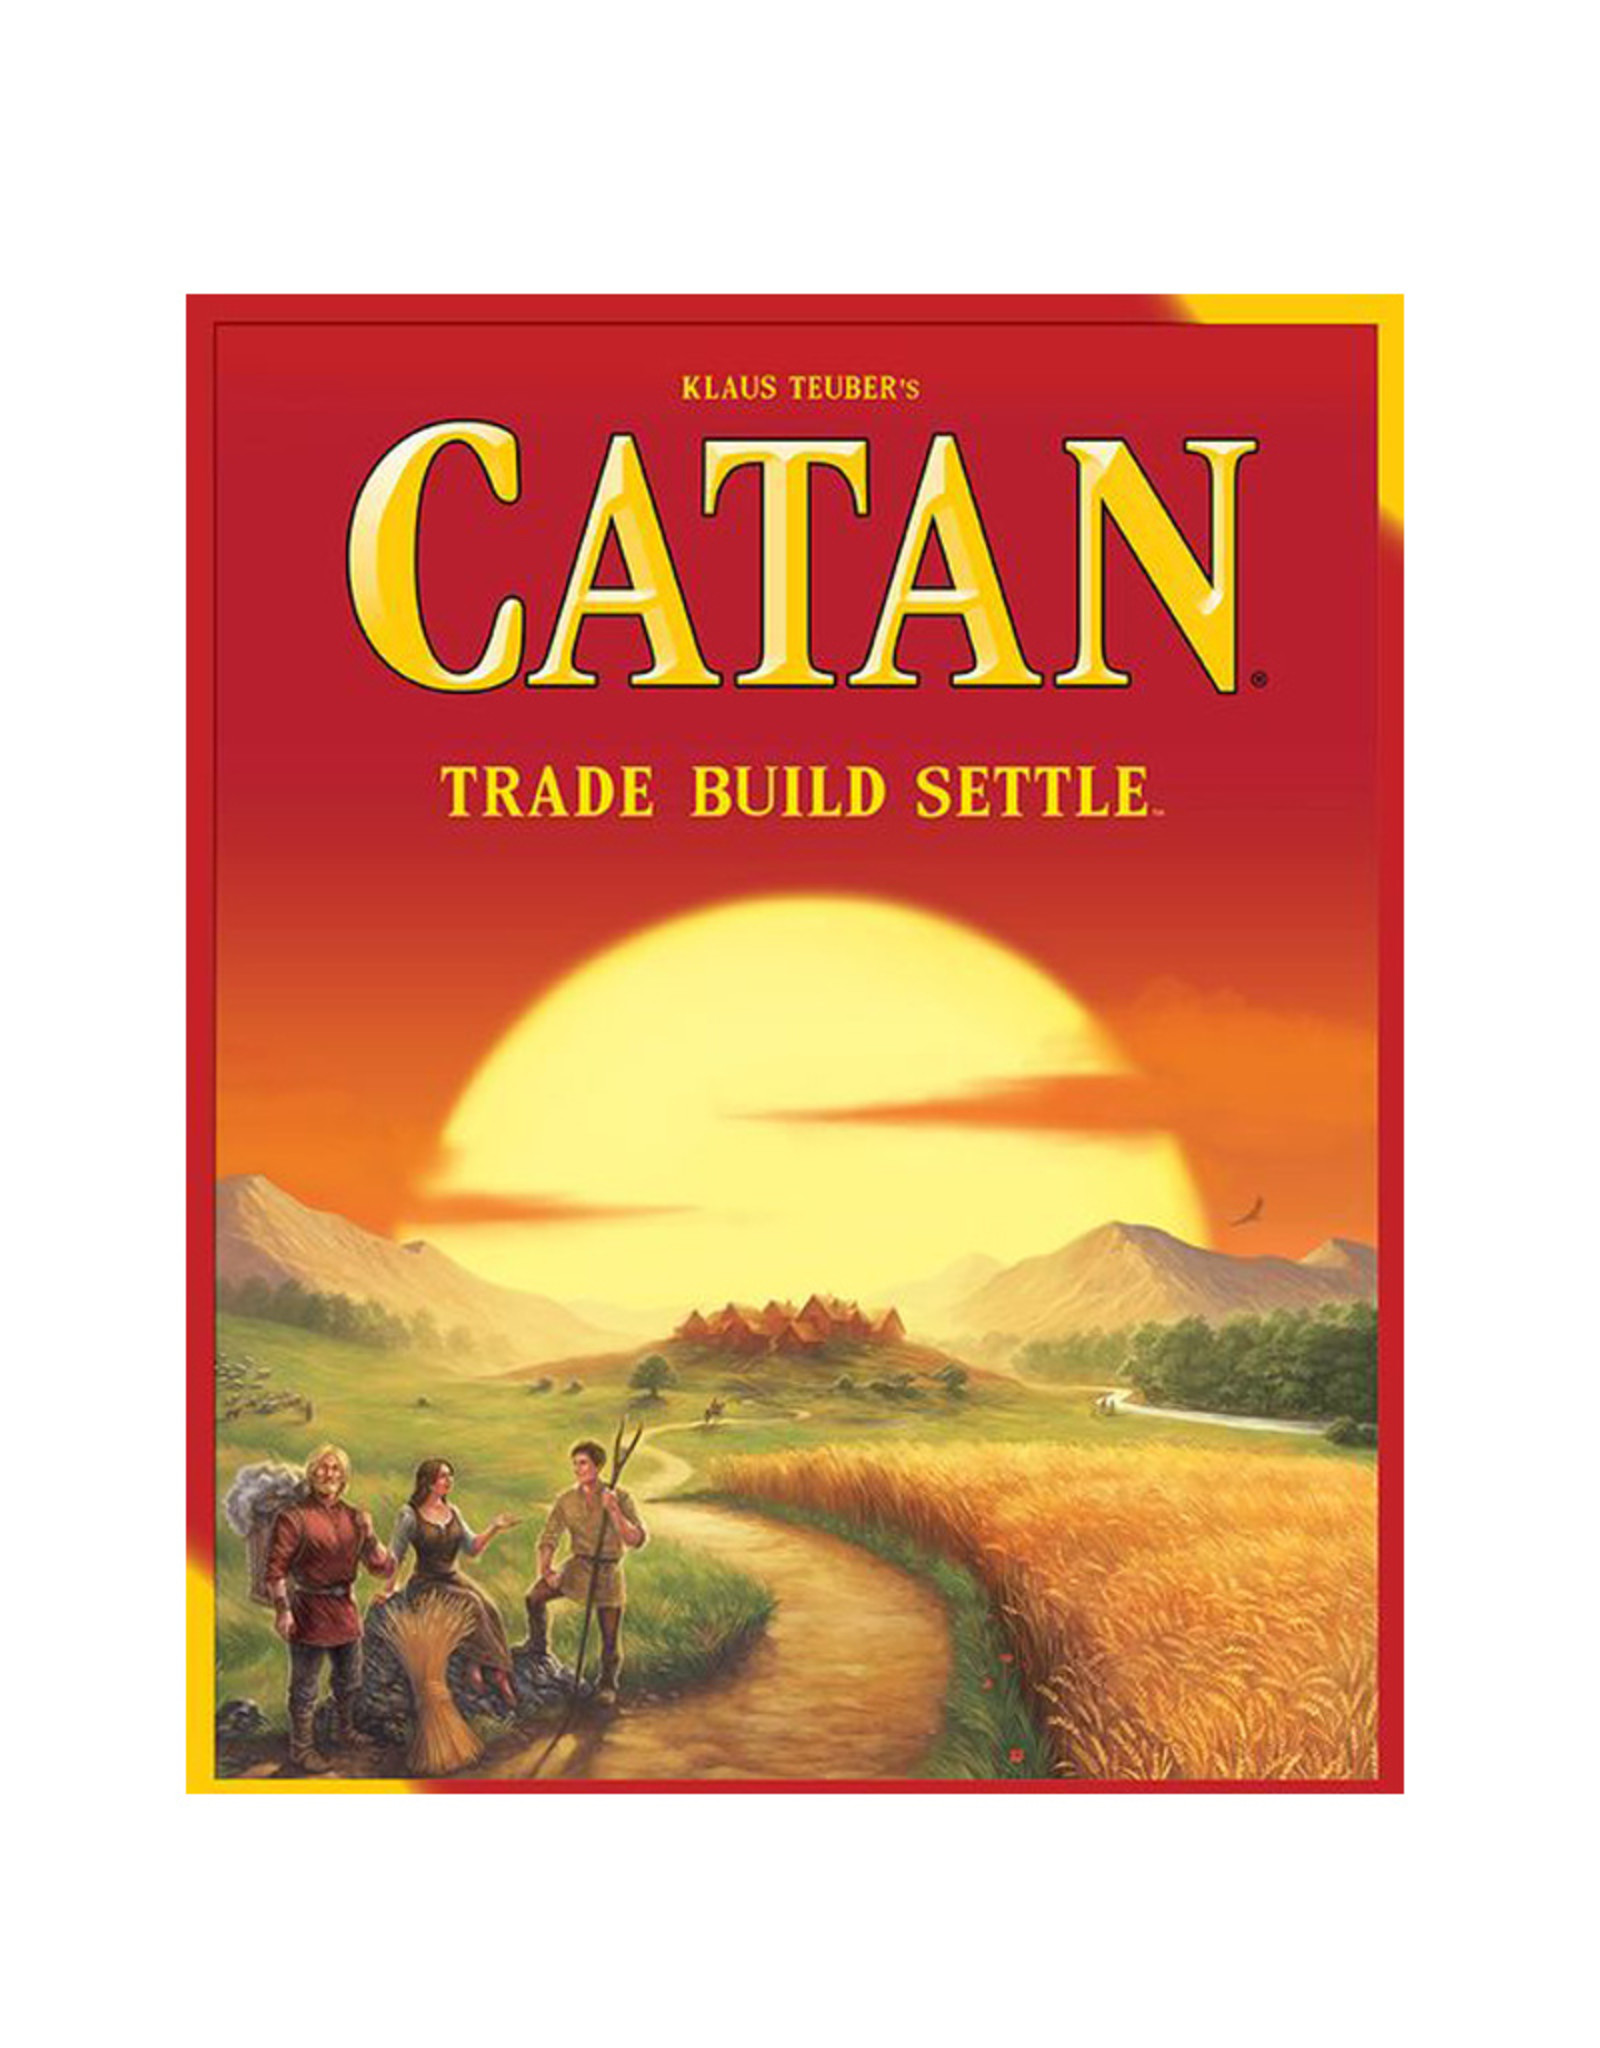 Mayfair Settlers of Catan